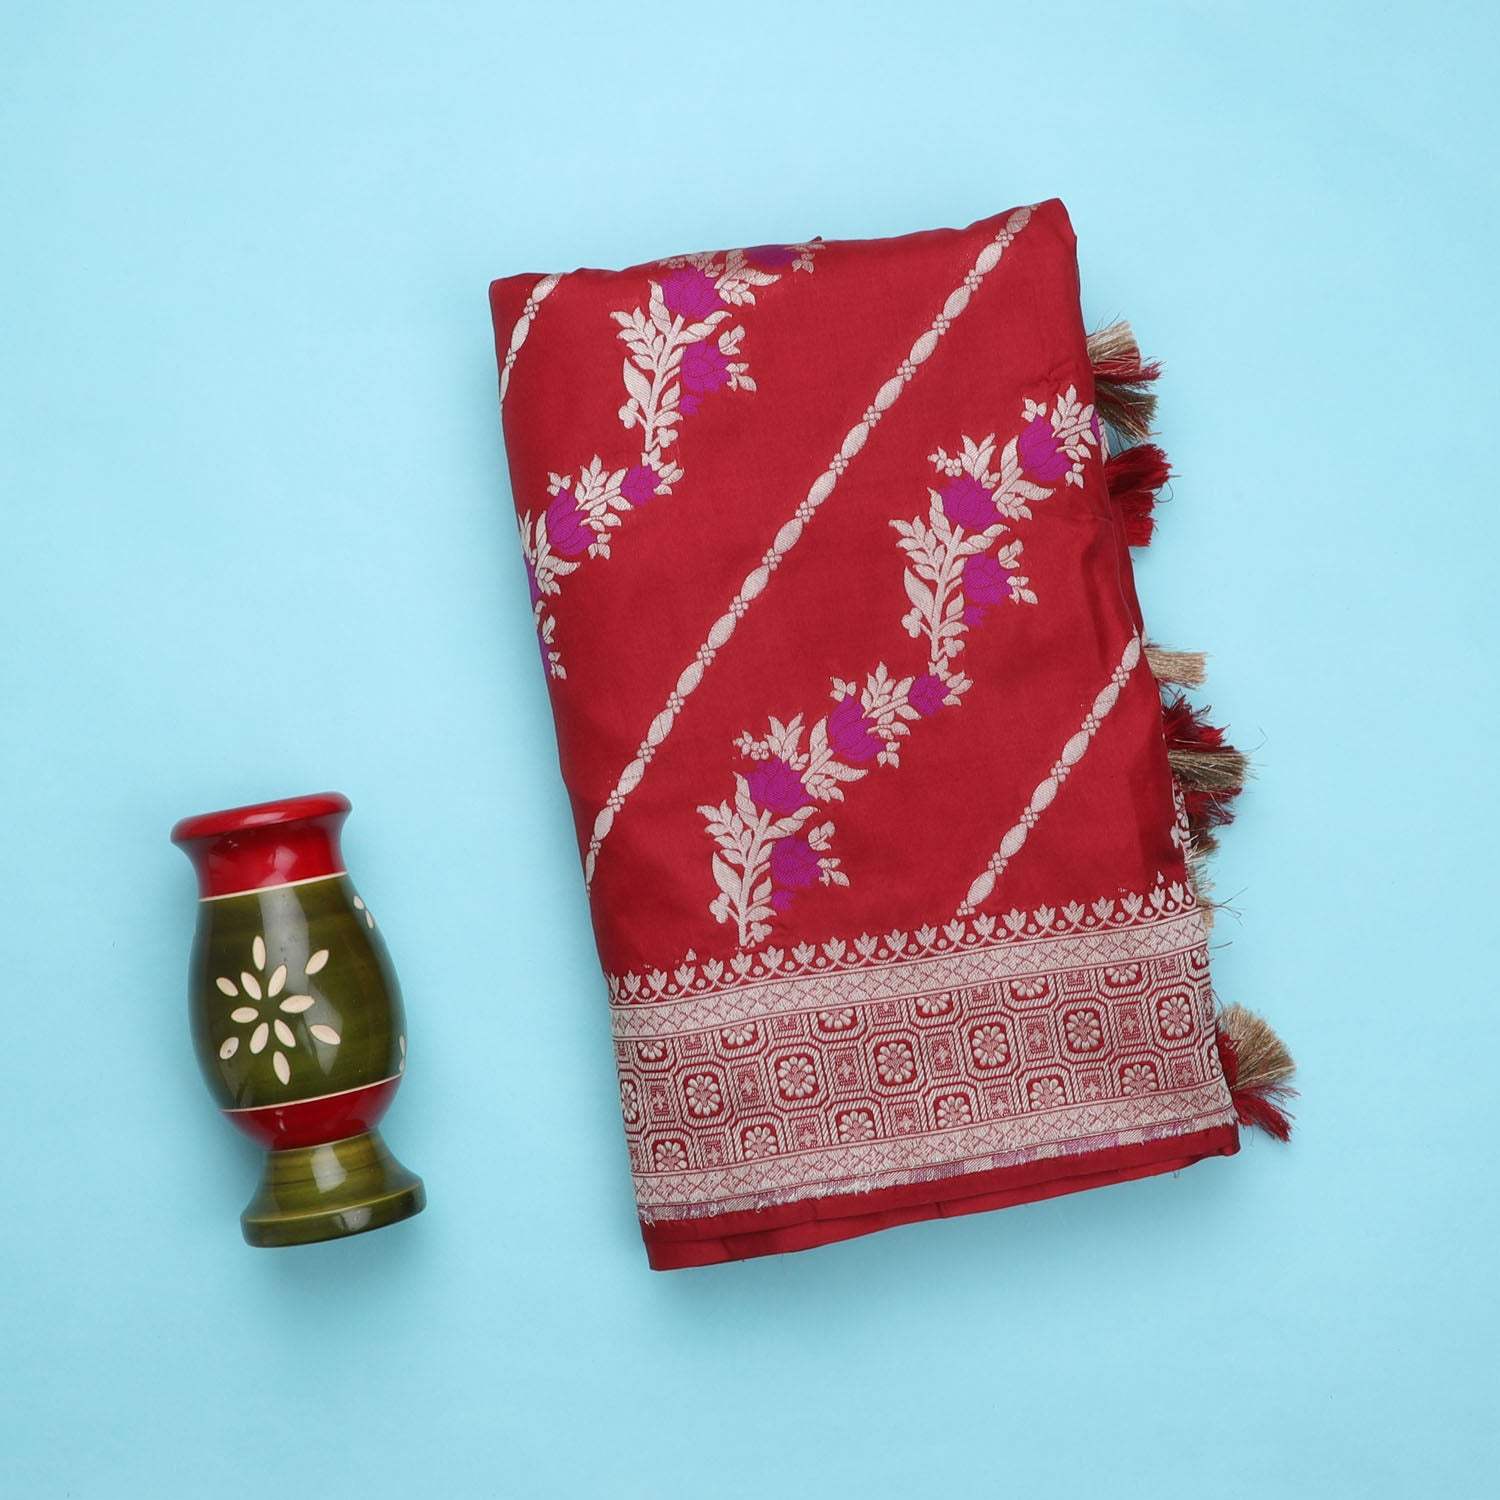 Deep Red Banarasi Silk Handloom Saree With Floral Motifs Pattern - Singhania's